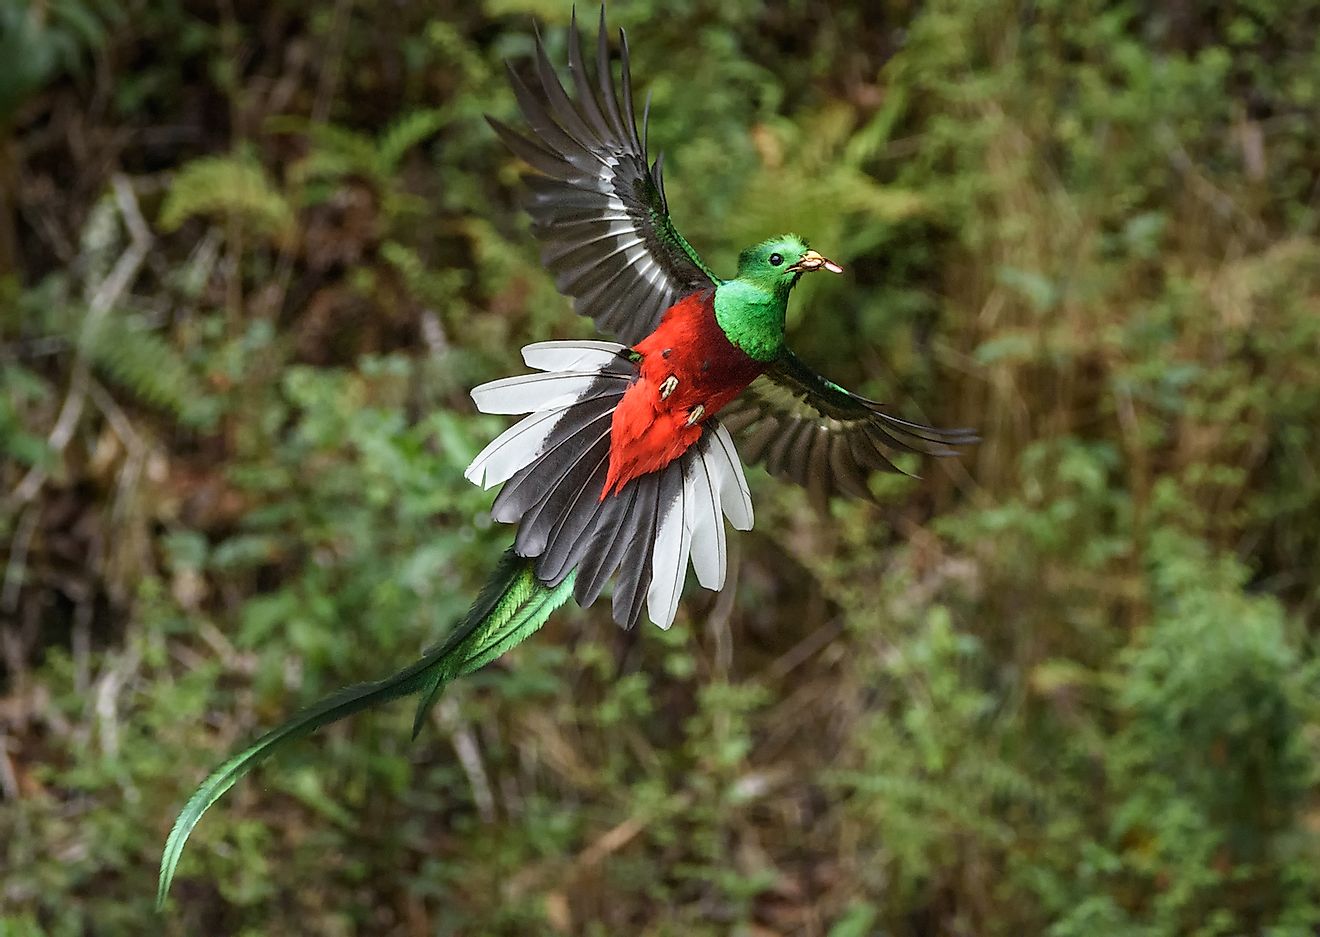 Resplendent Quetzal Cloud forest. Image credit: Mario Wong Pastor/Shutterstock.com